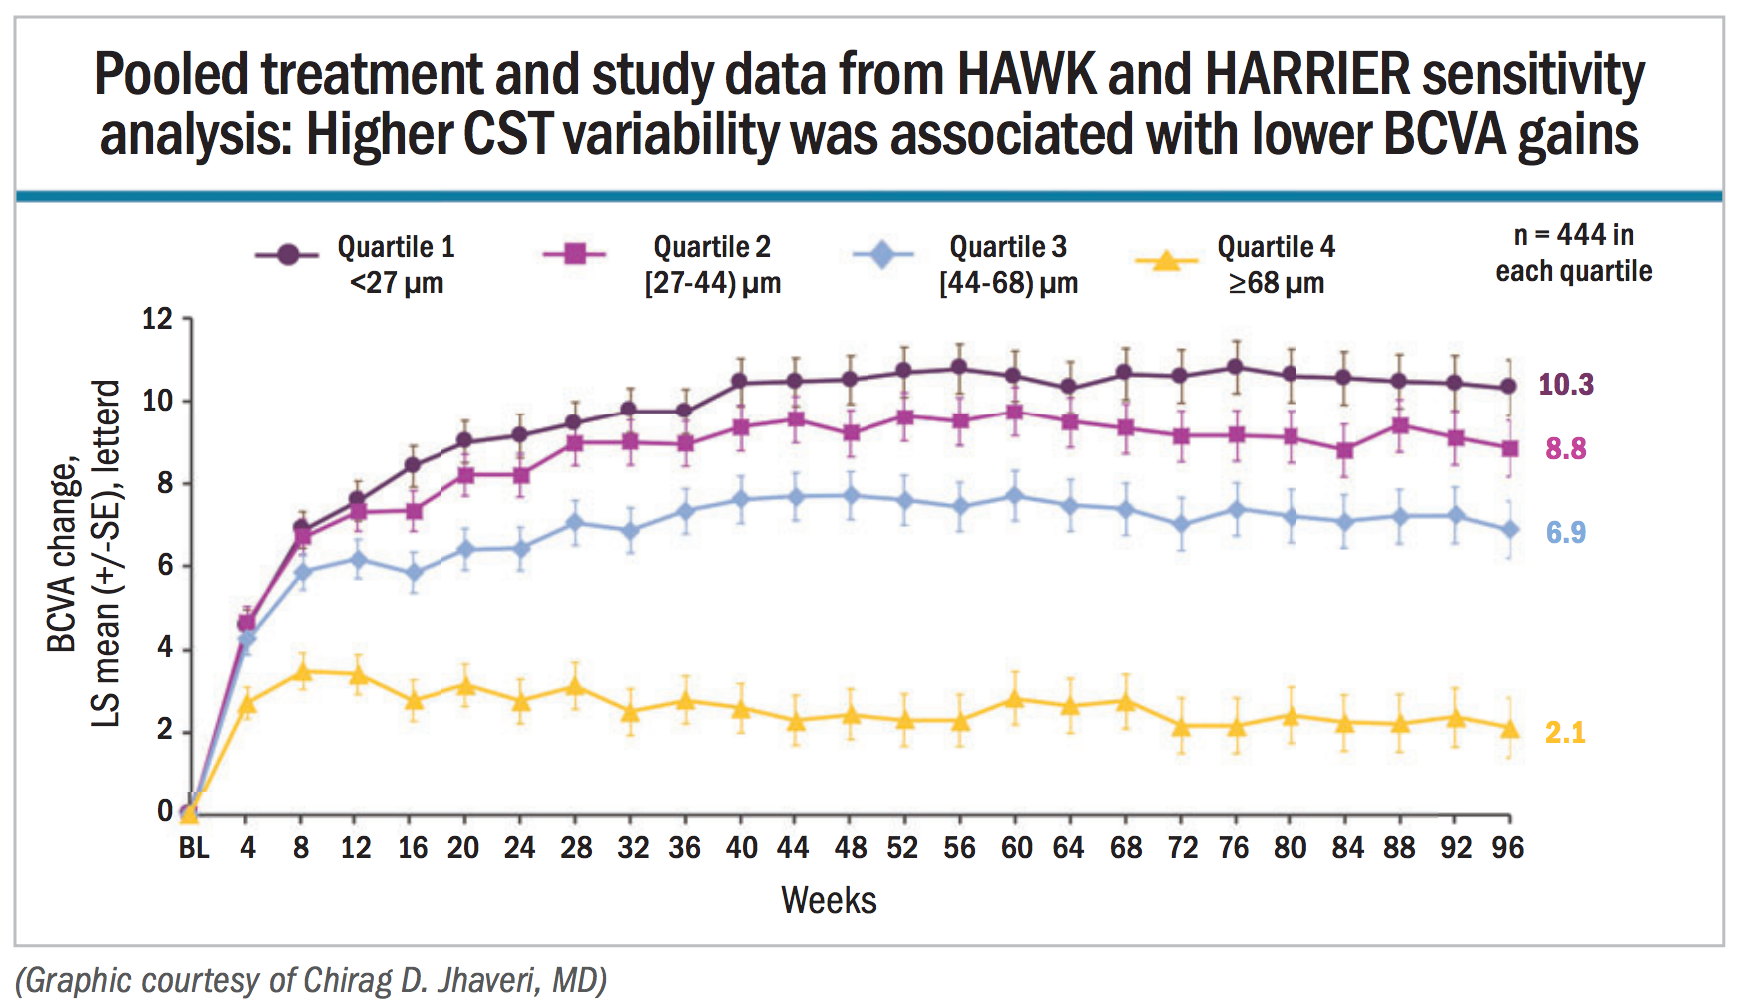 HAWK, HARRIER treatment and study data 